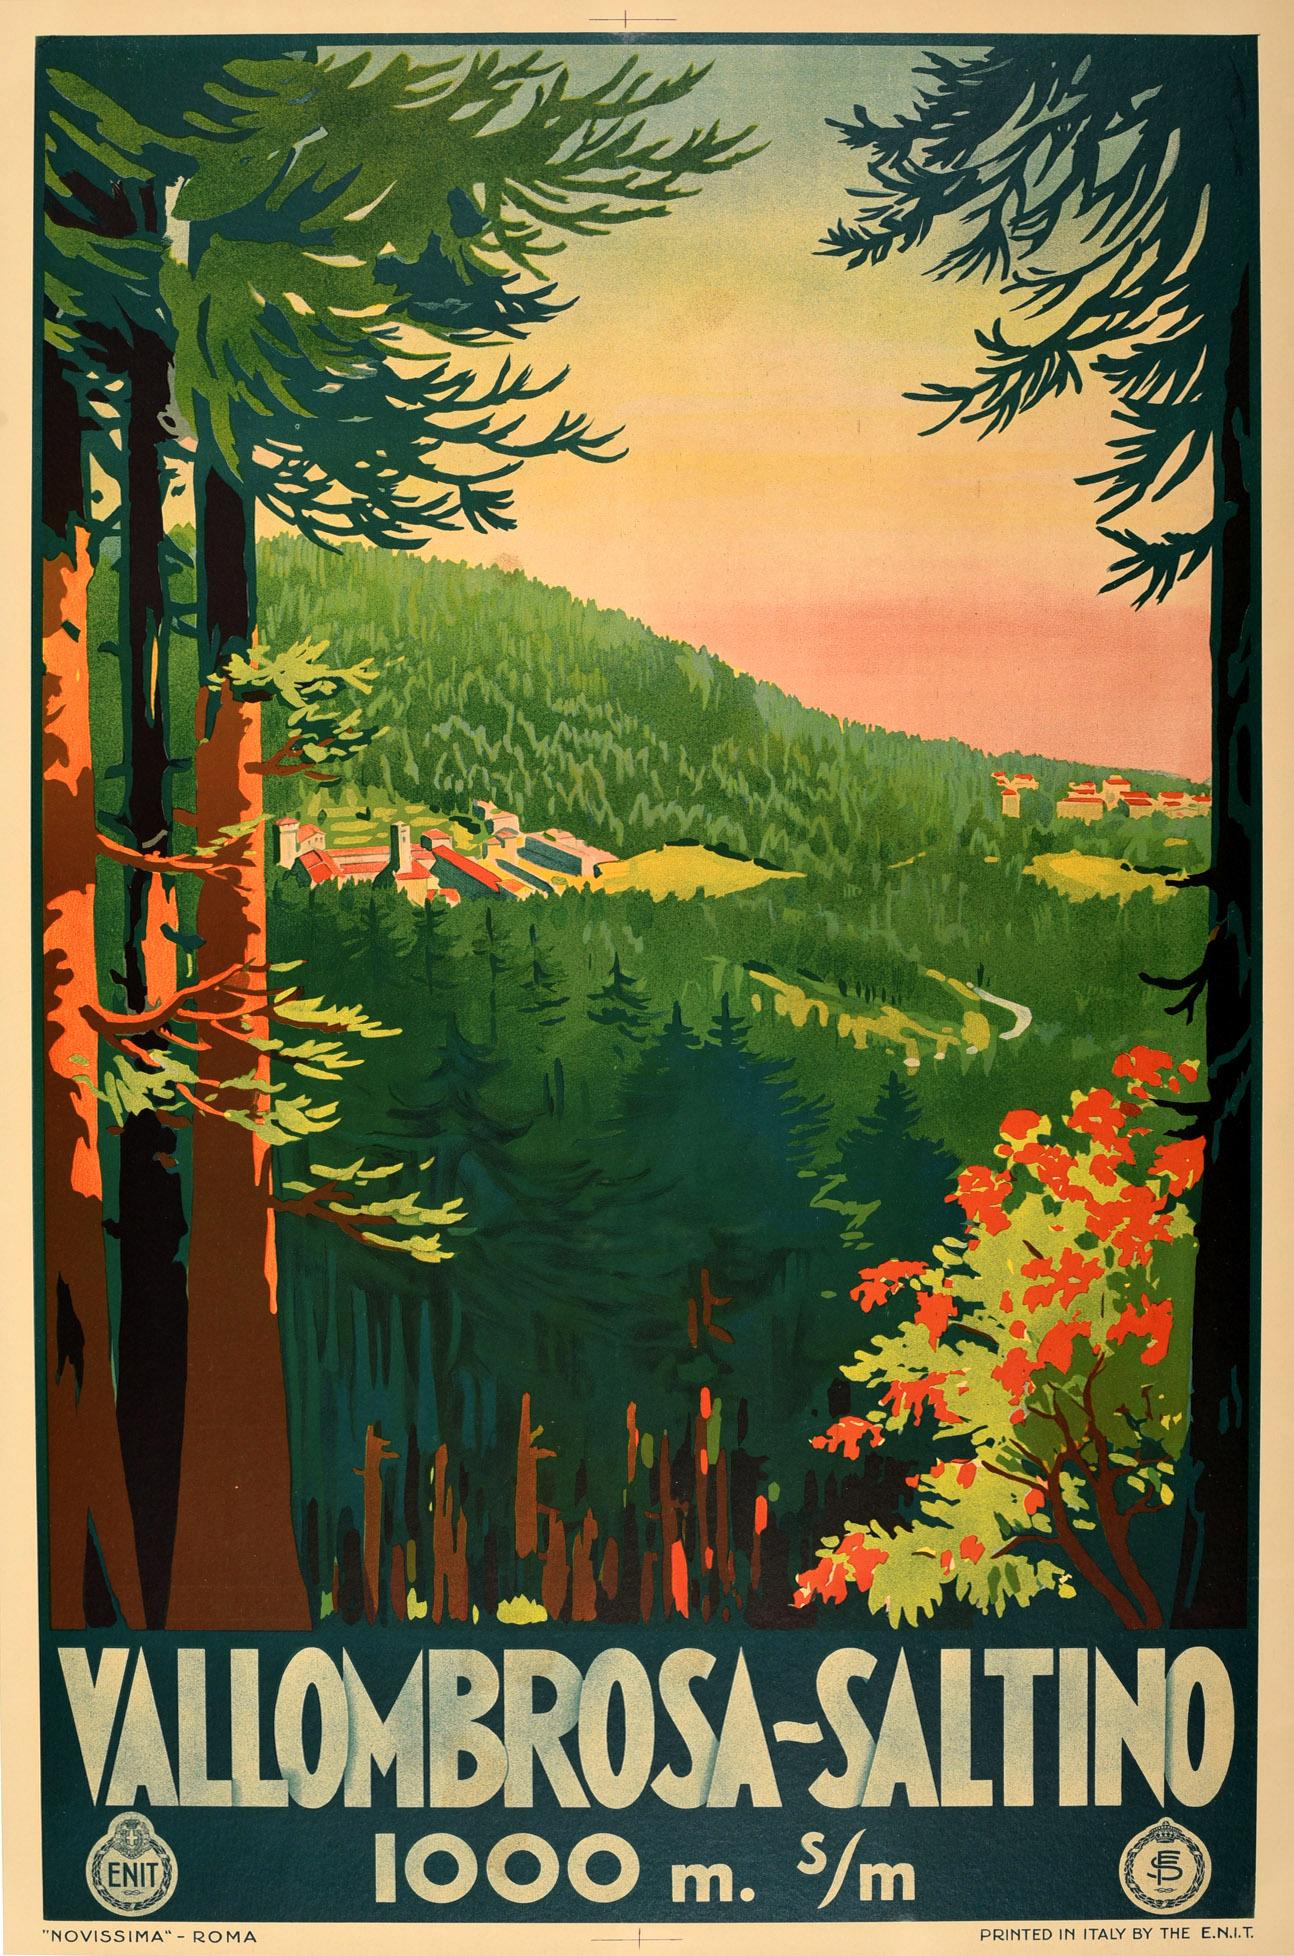 Unknown Print - Original Vintage Poster Vallombrosa Saltino Tuscany Forest Railway Travel ENIT